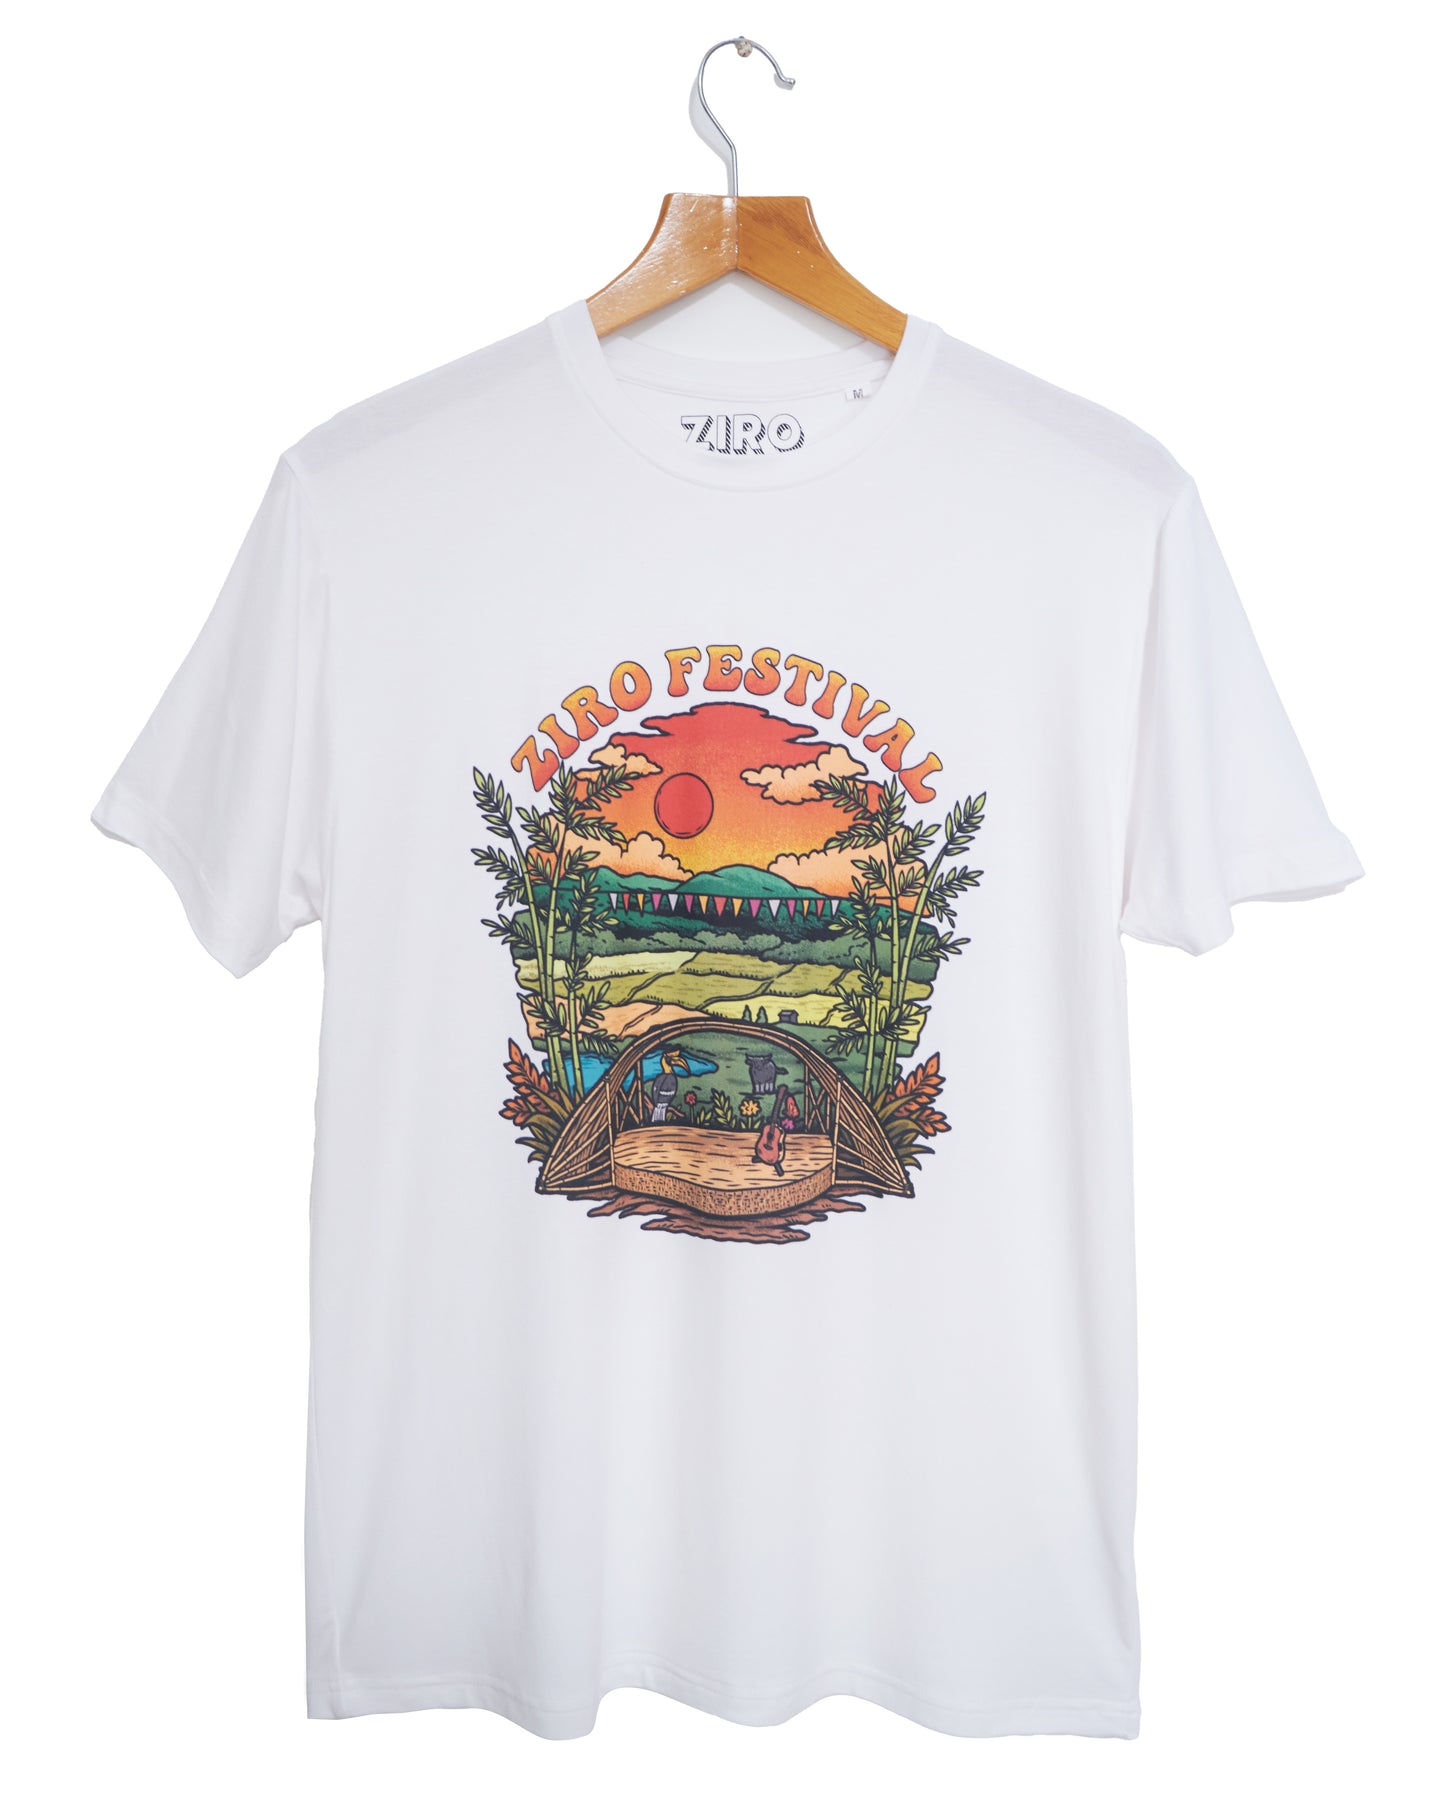 ZIRO Festival Sunset Stage Limited Edition Unisex Bamboo Fabric T-Shirt